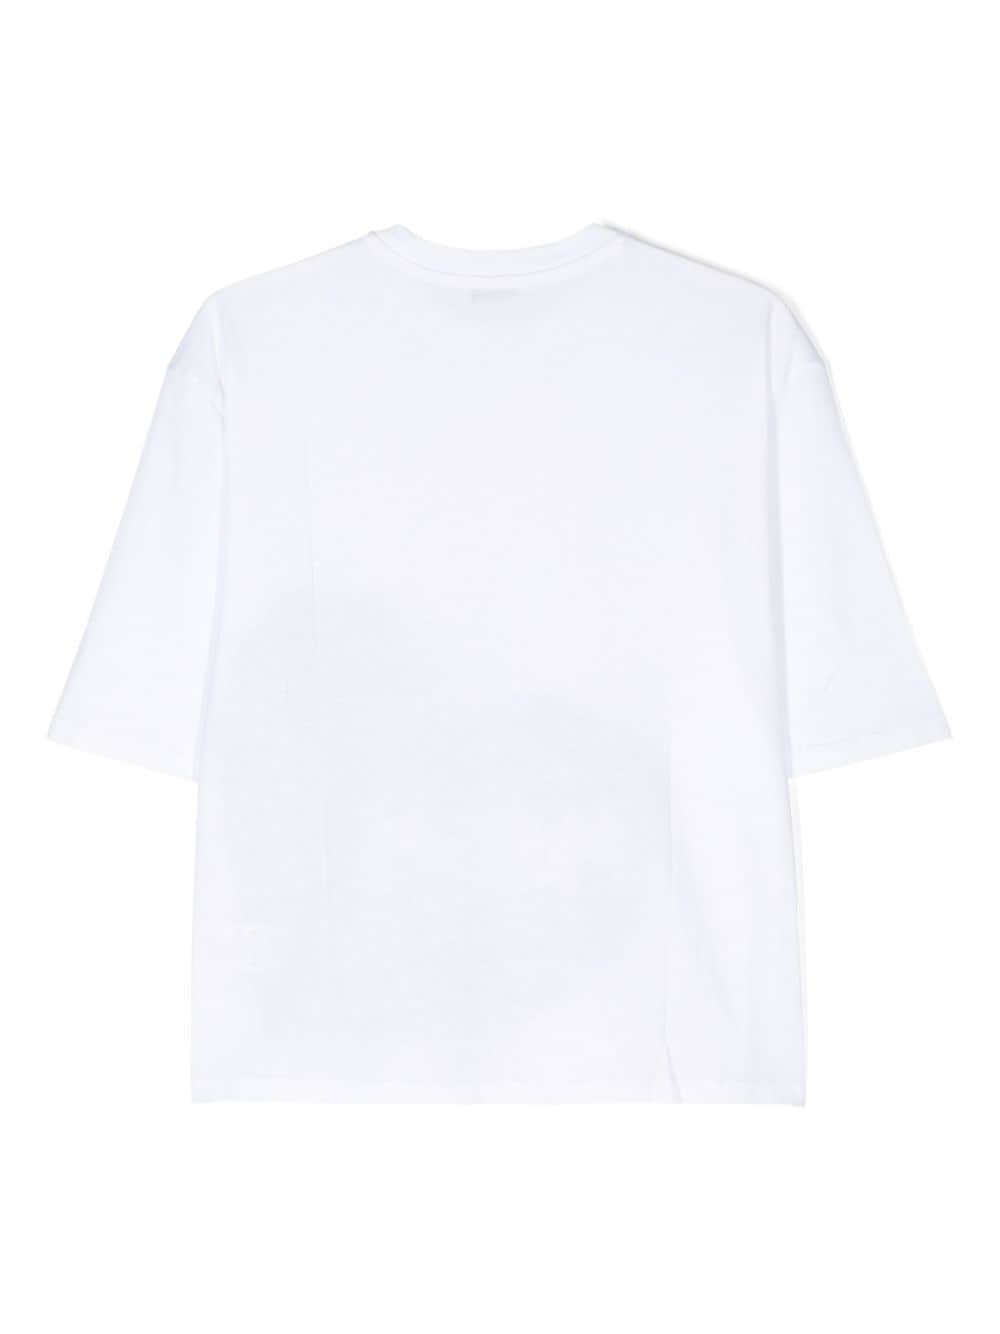 White cotton t-shirt for girls